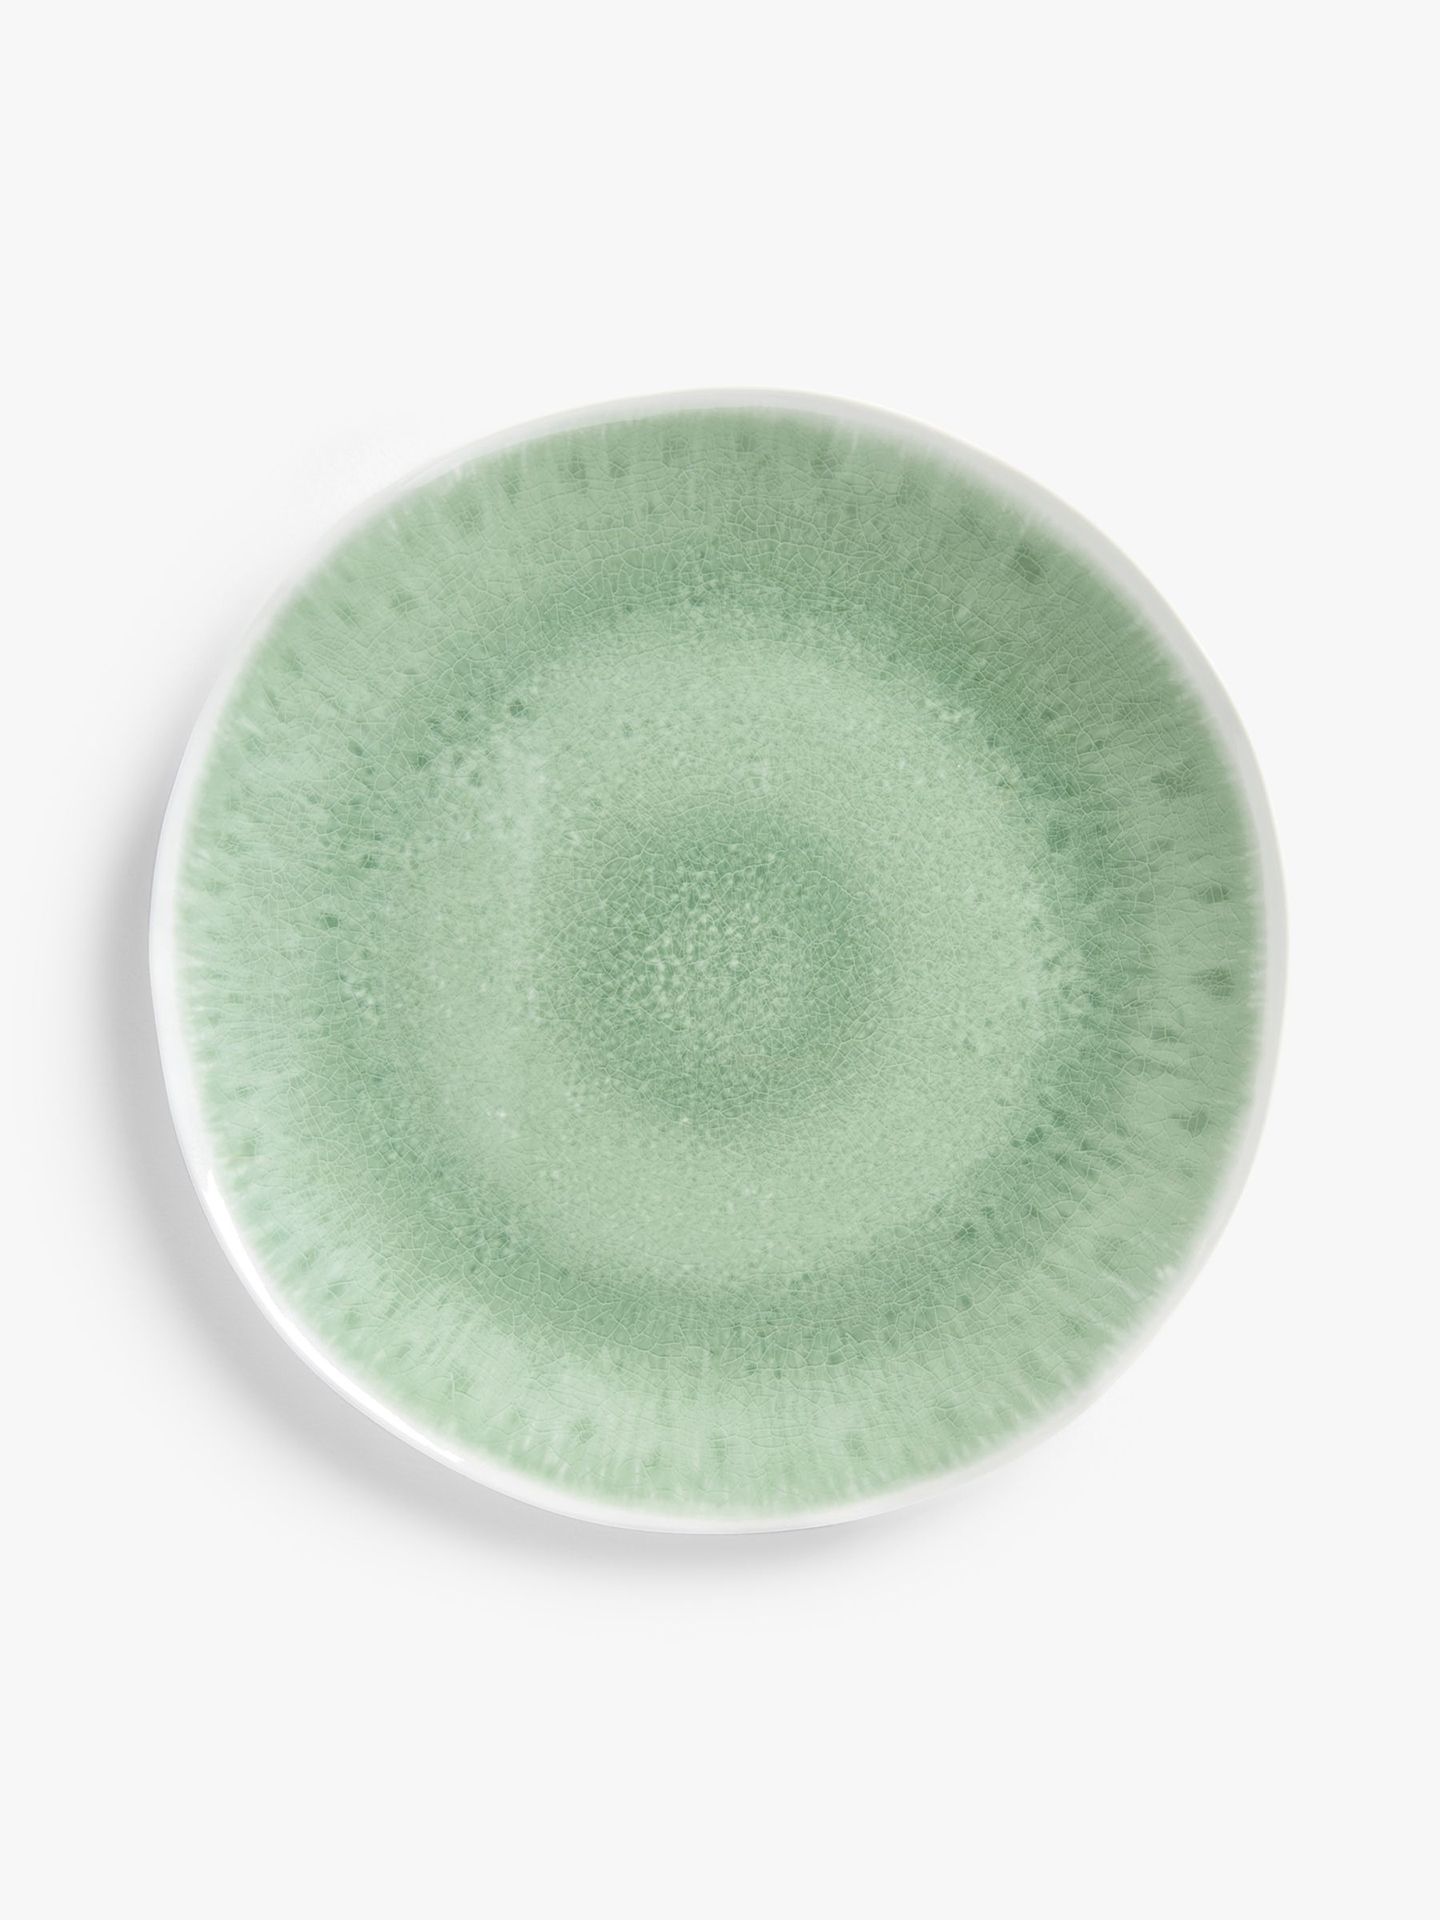 John Lewis & Partners Modern Country Crackle Glaze Melamine Plate, 26.7cm, Green